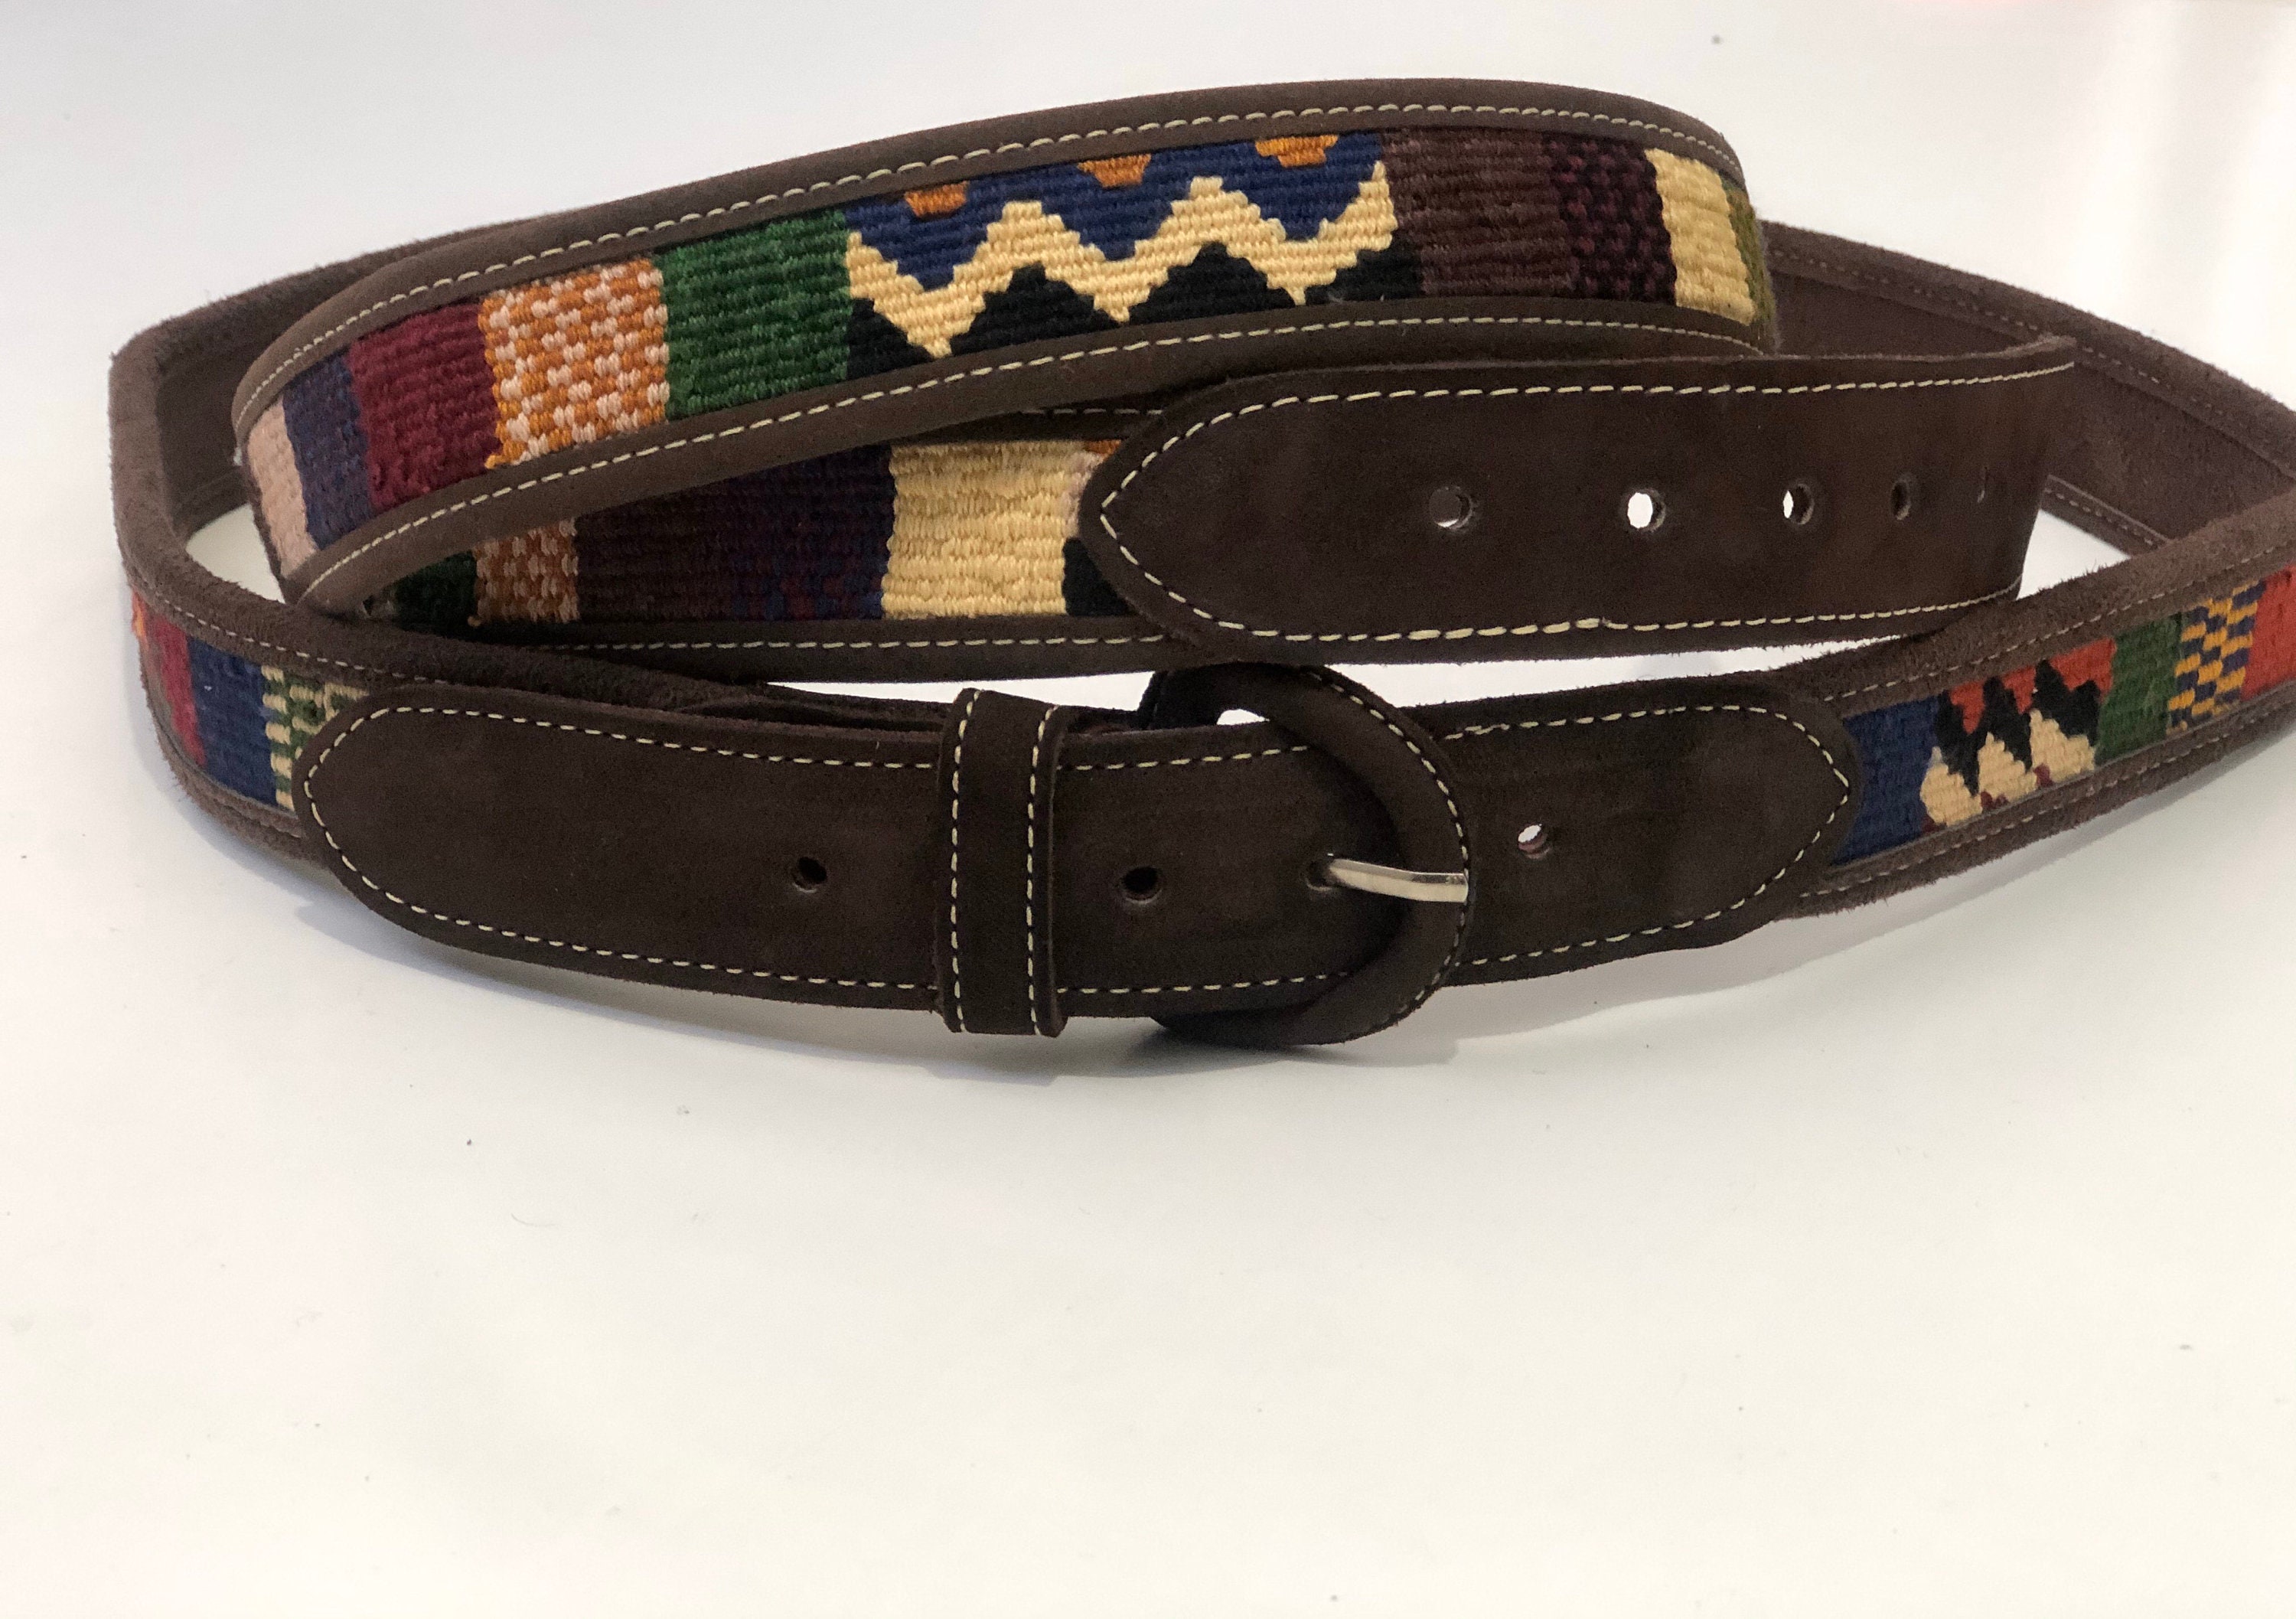 Woven Belt Cinturón Artesanal Tejidomulticolored Leather - Etsy